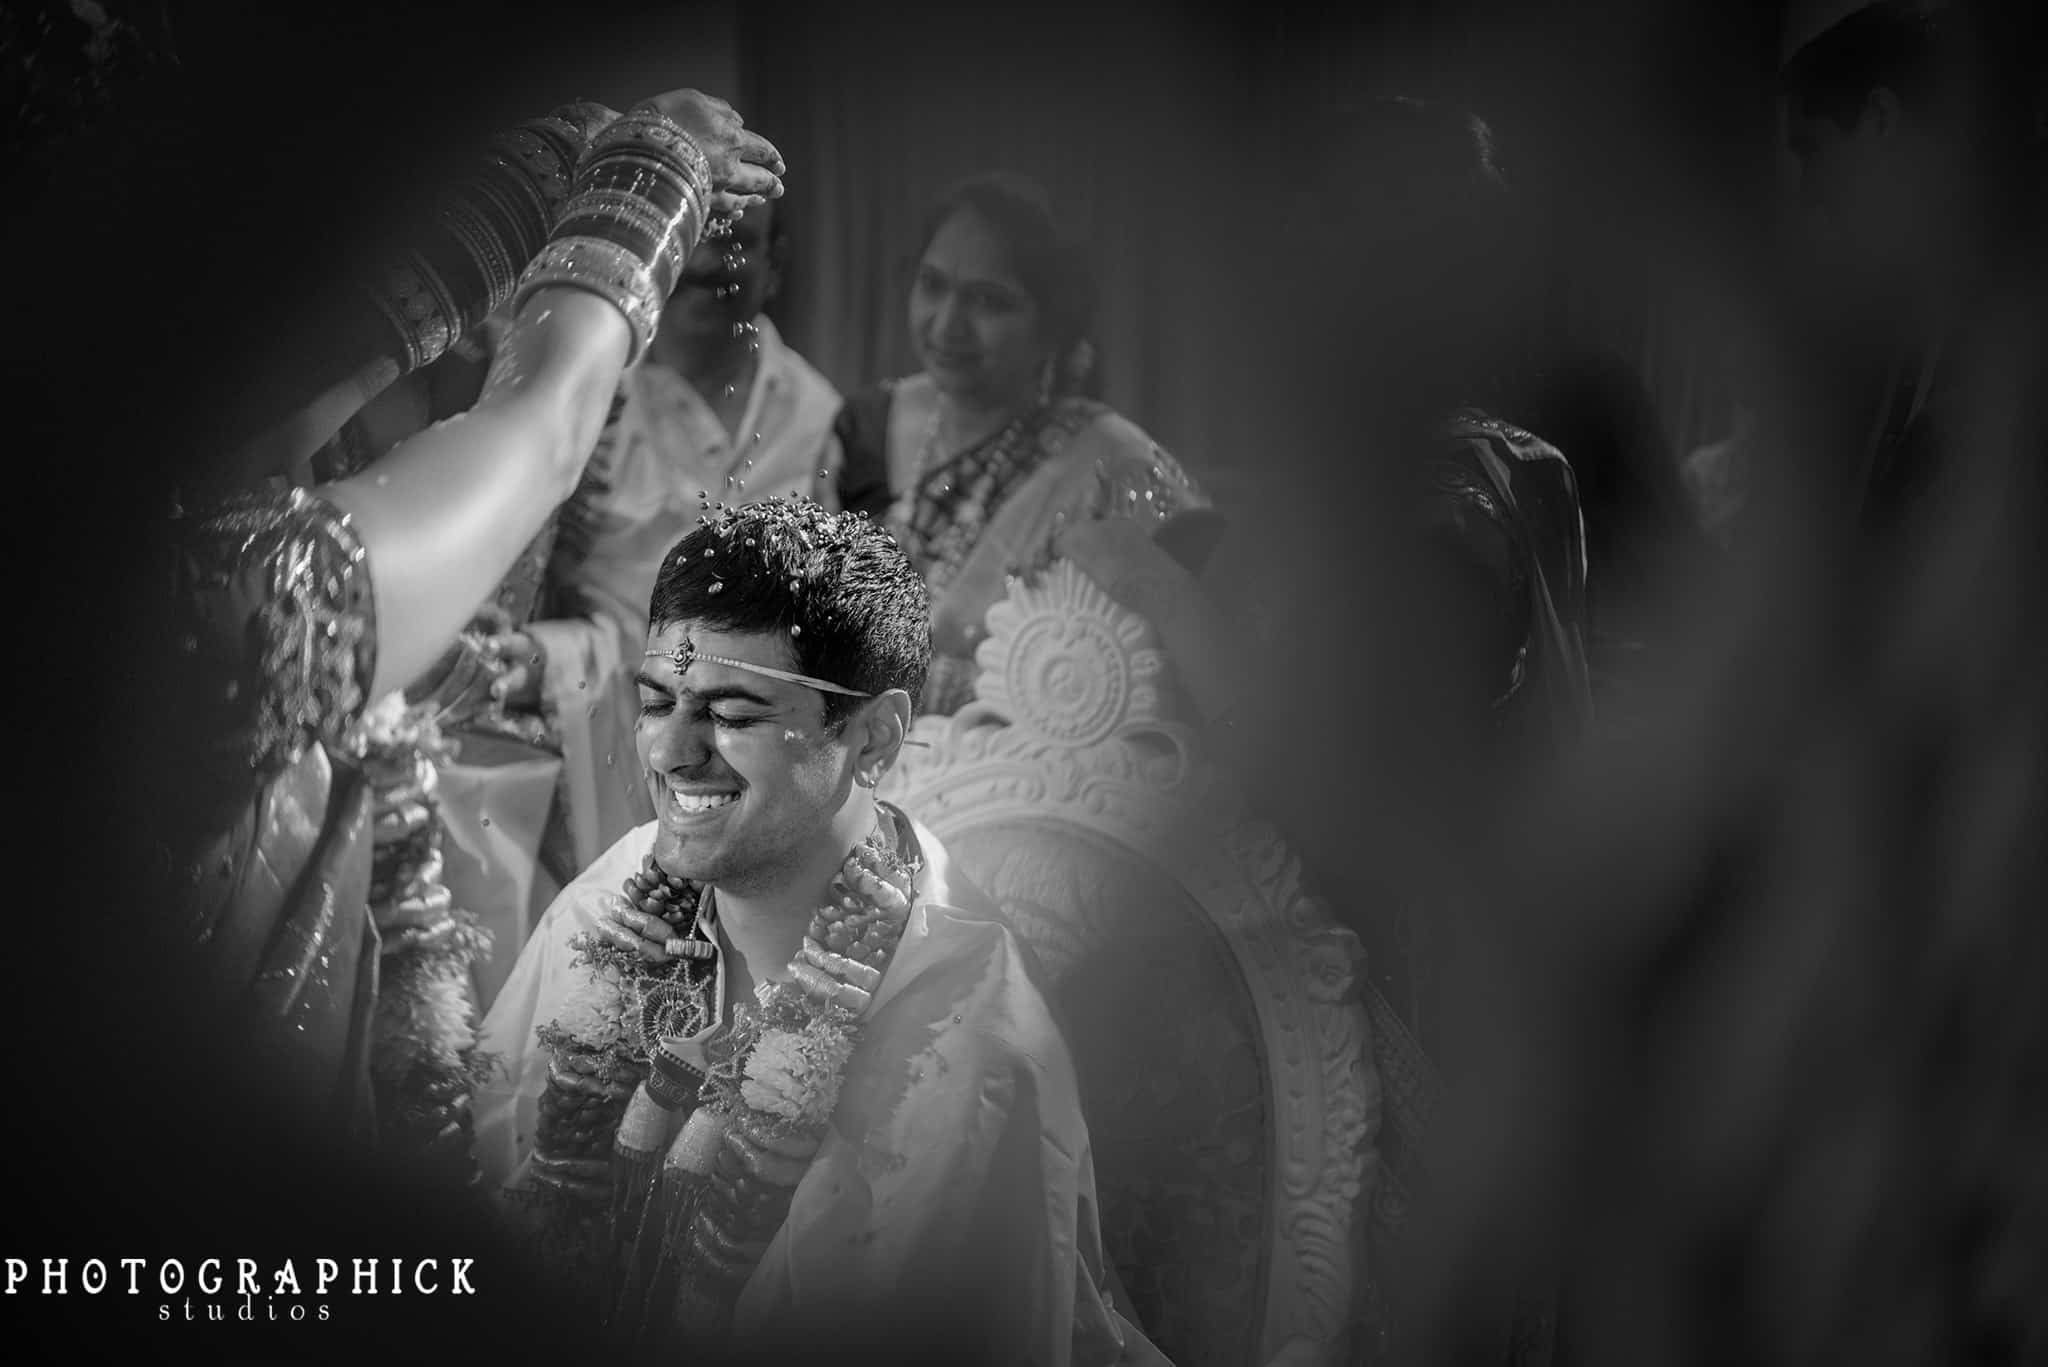 Landsdowne Indian Wedding, Harleen and Shravan: Three Day Hindu and Sikh Wedding